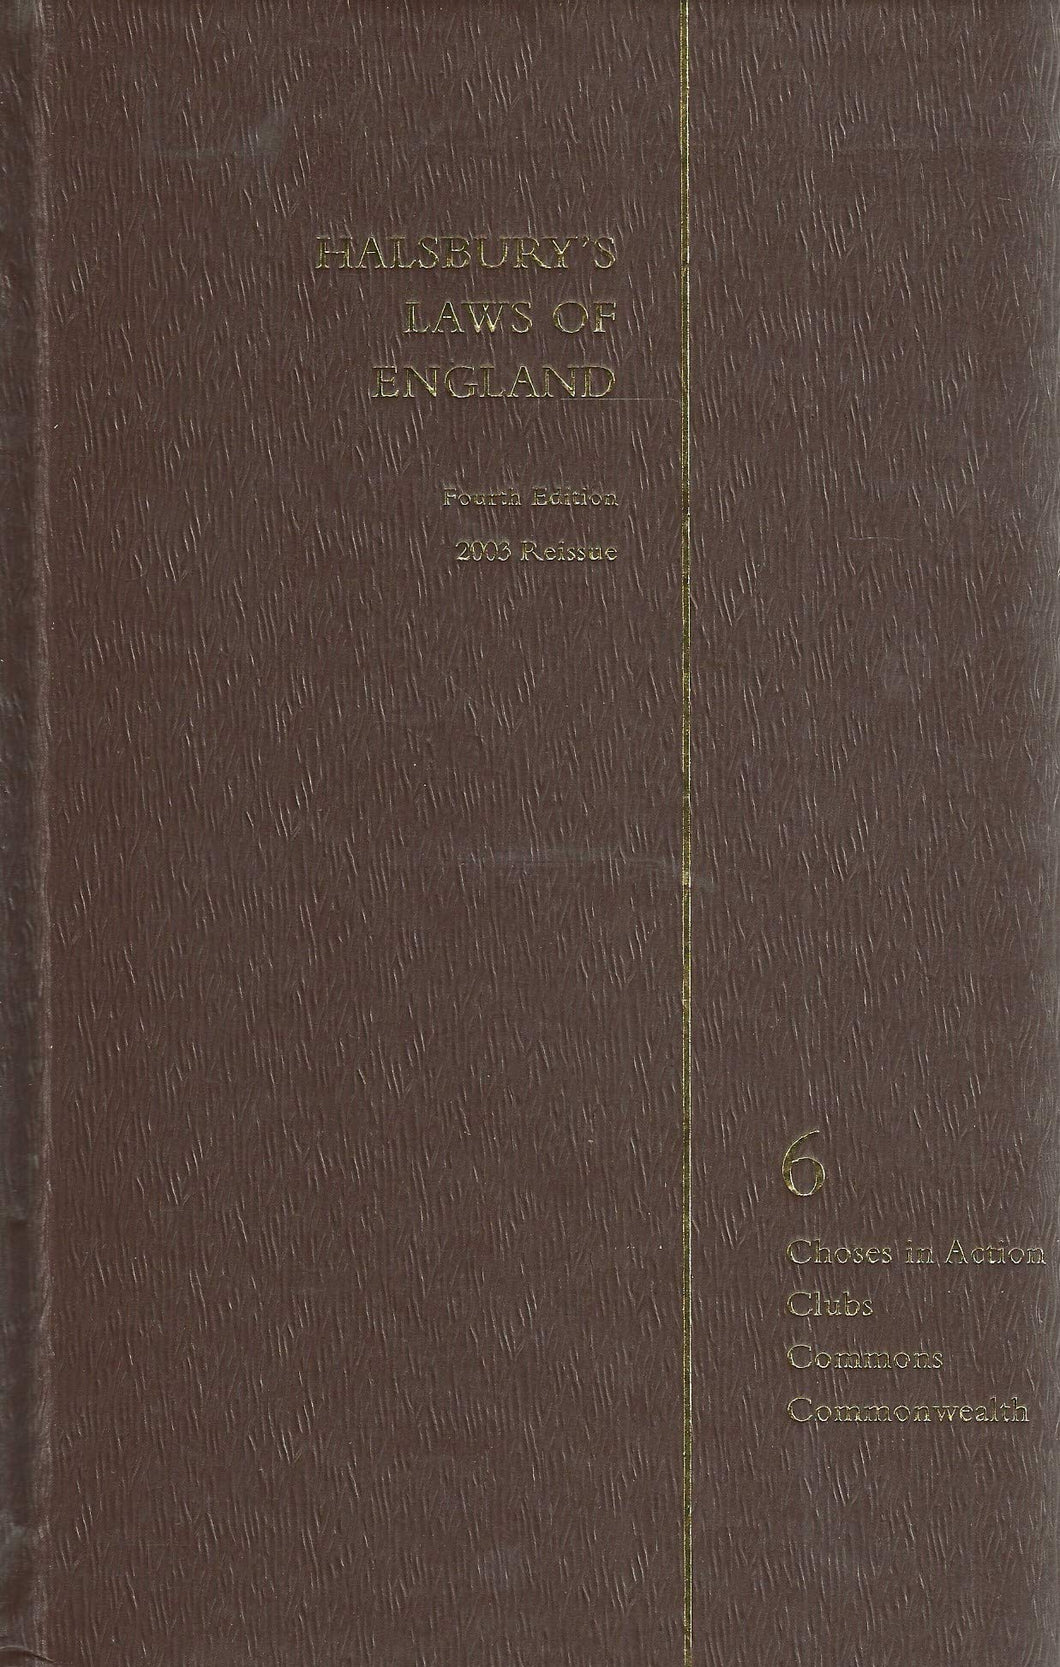 Halsbury's Laws of England Vol 6 2003 reissue